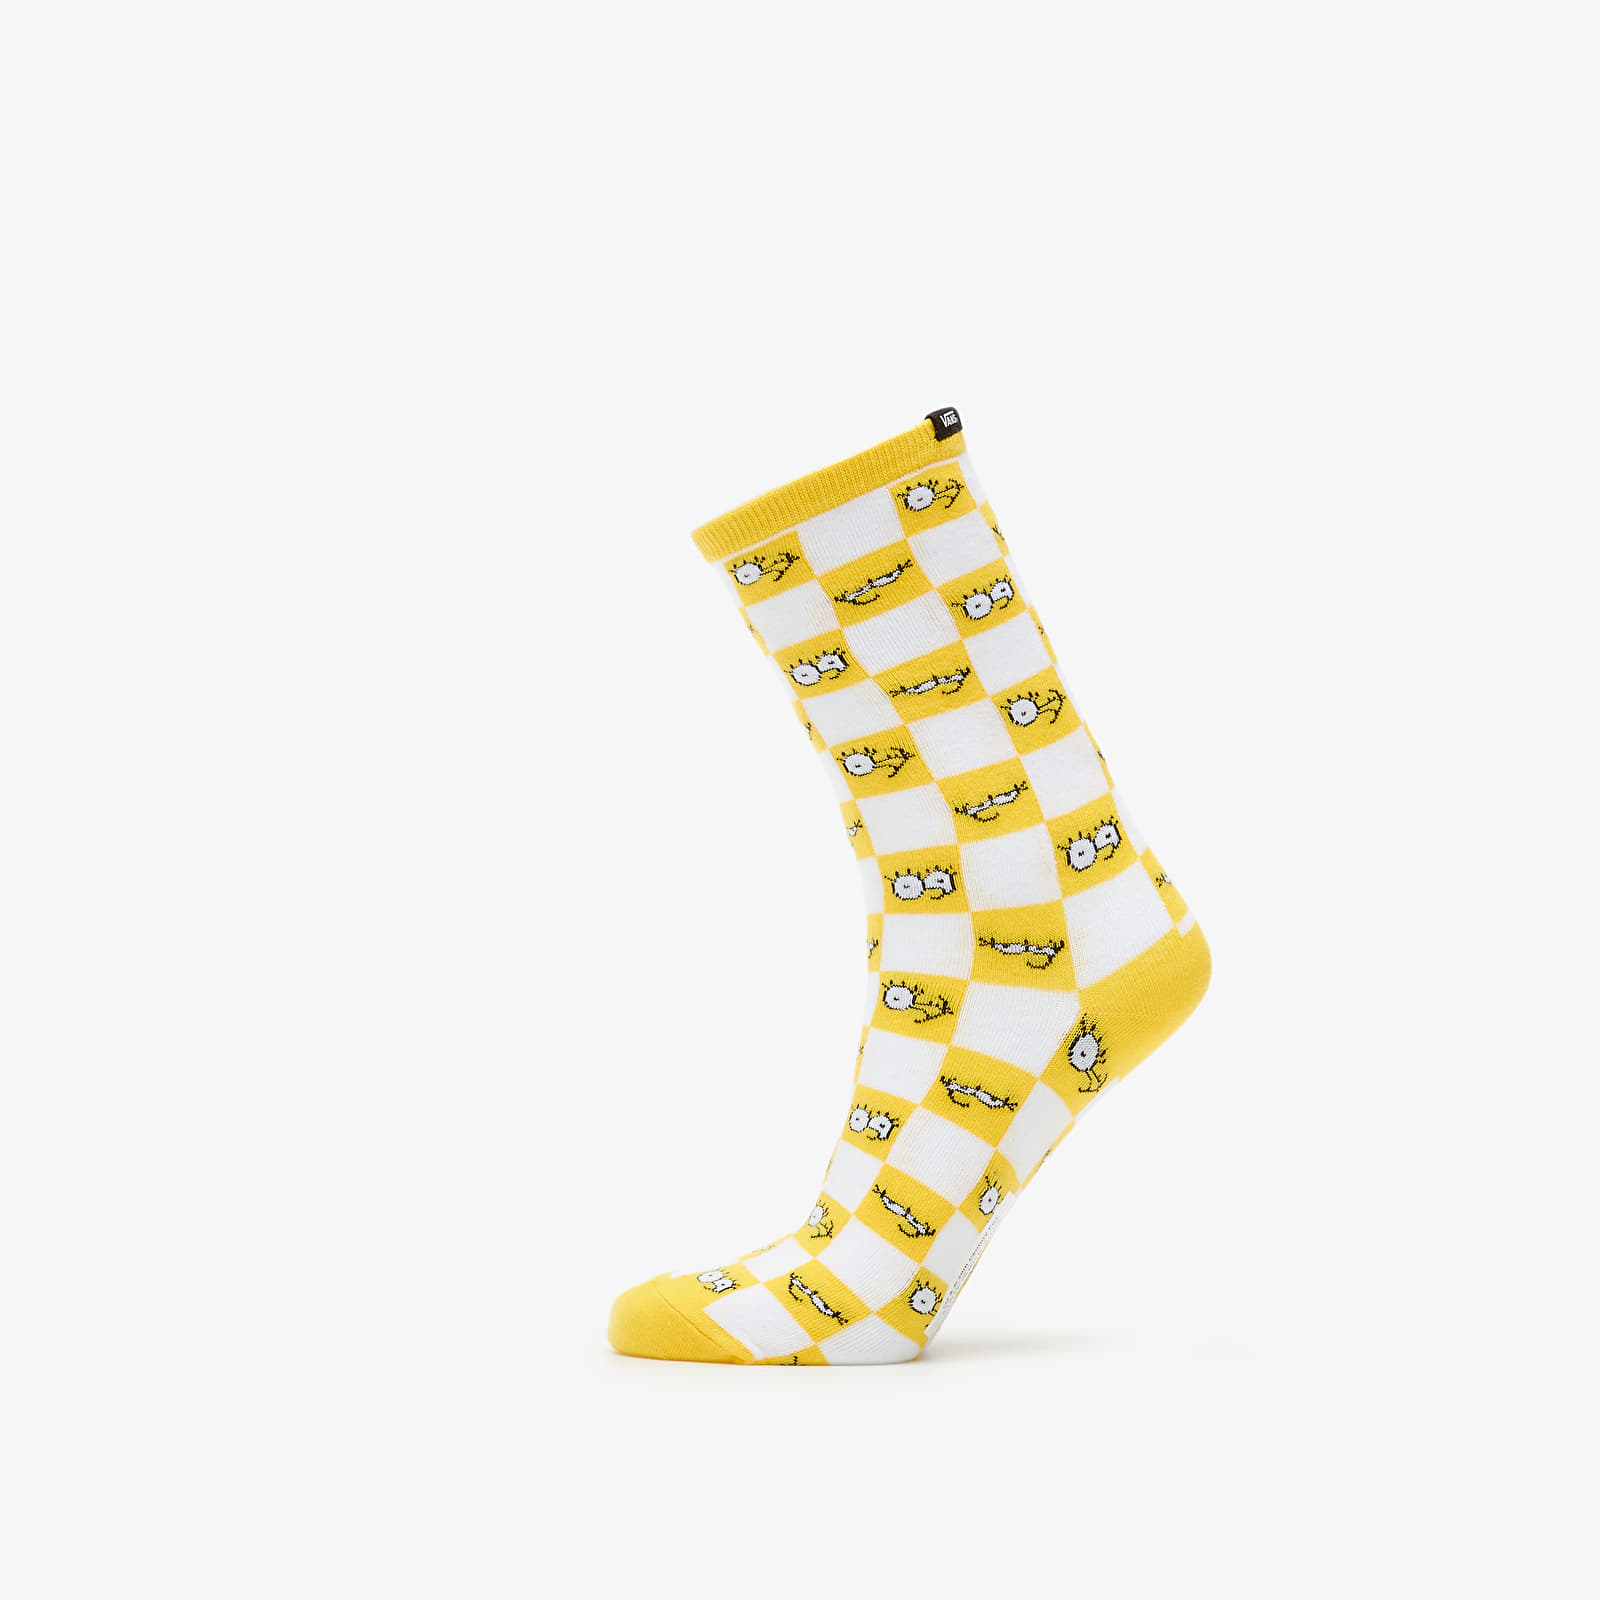 Calzetti Vans x The Simpsons Socks Yellow